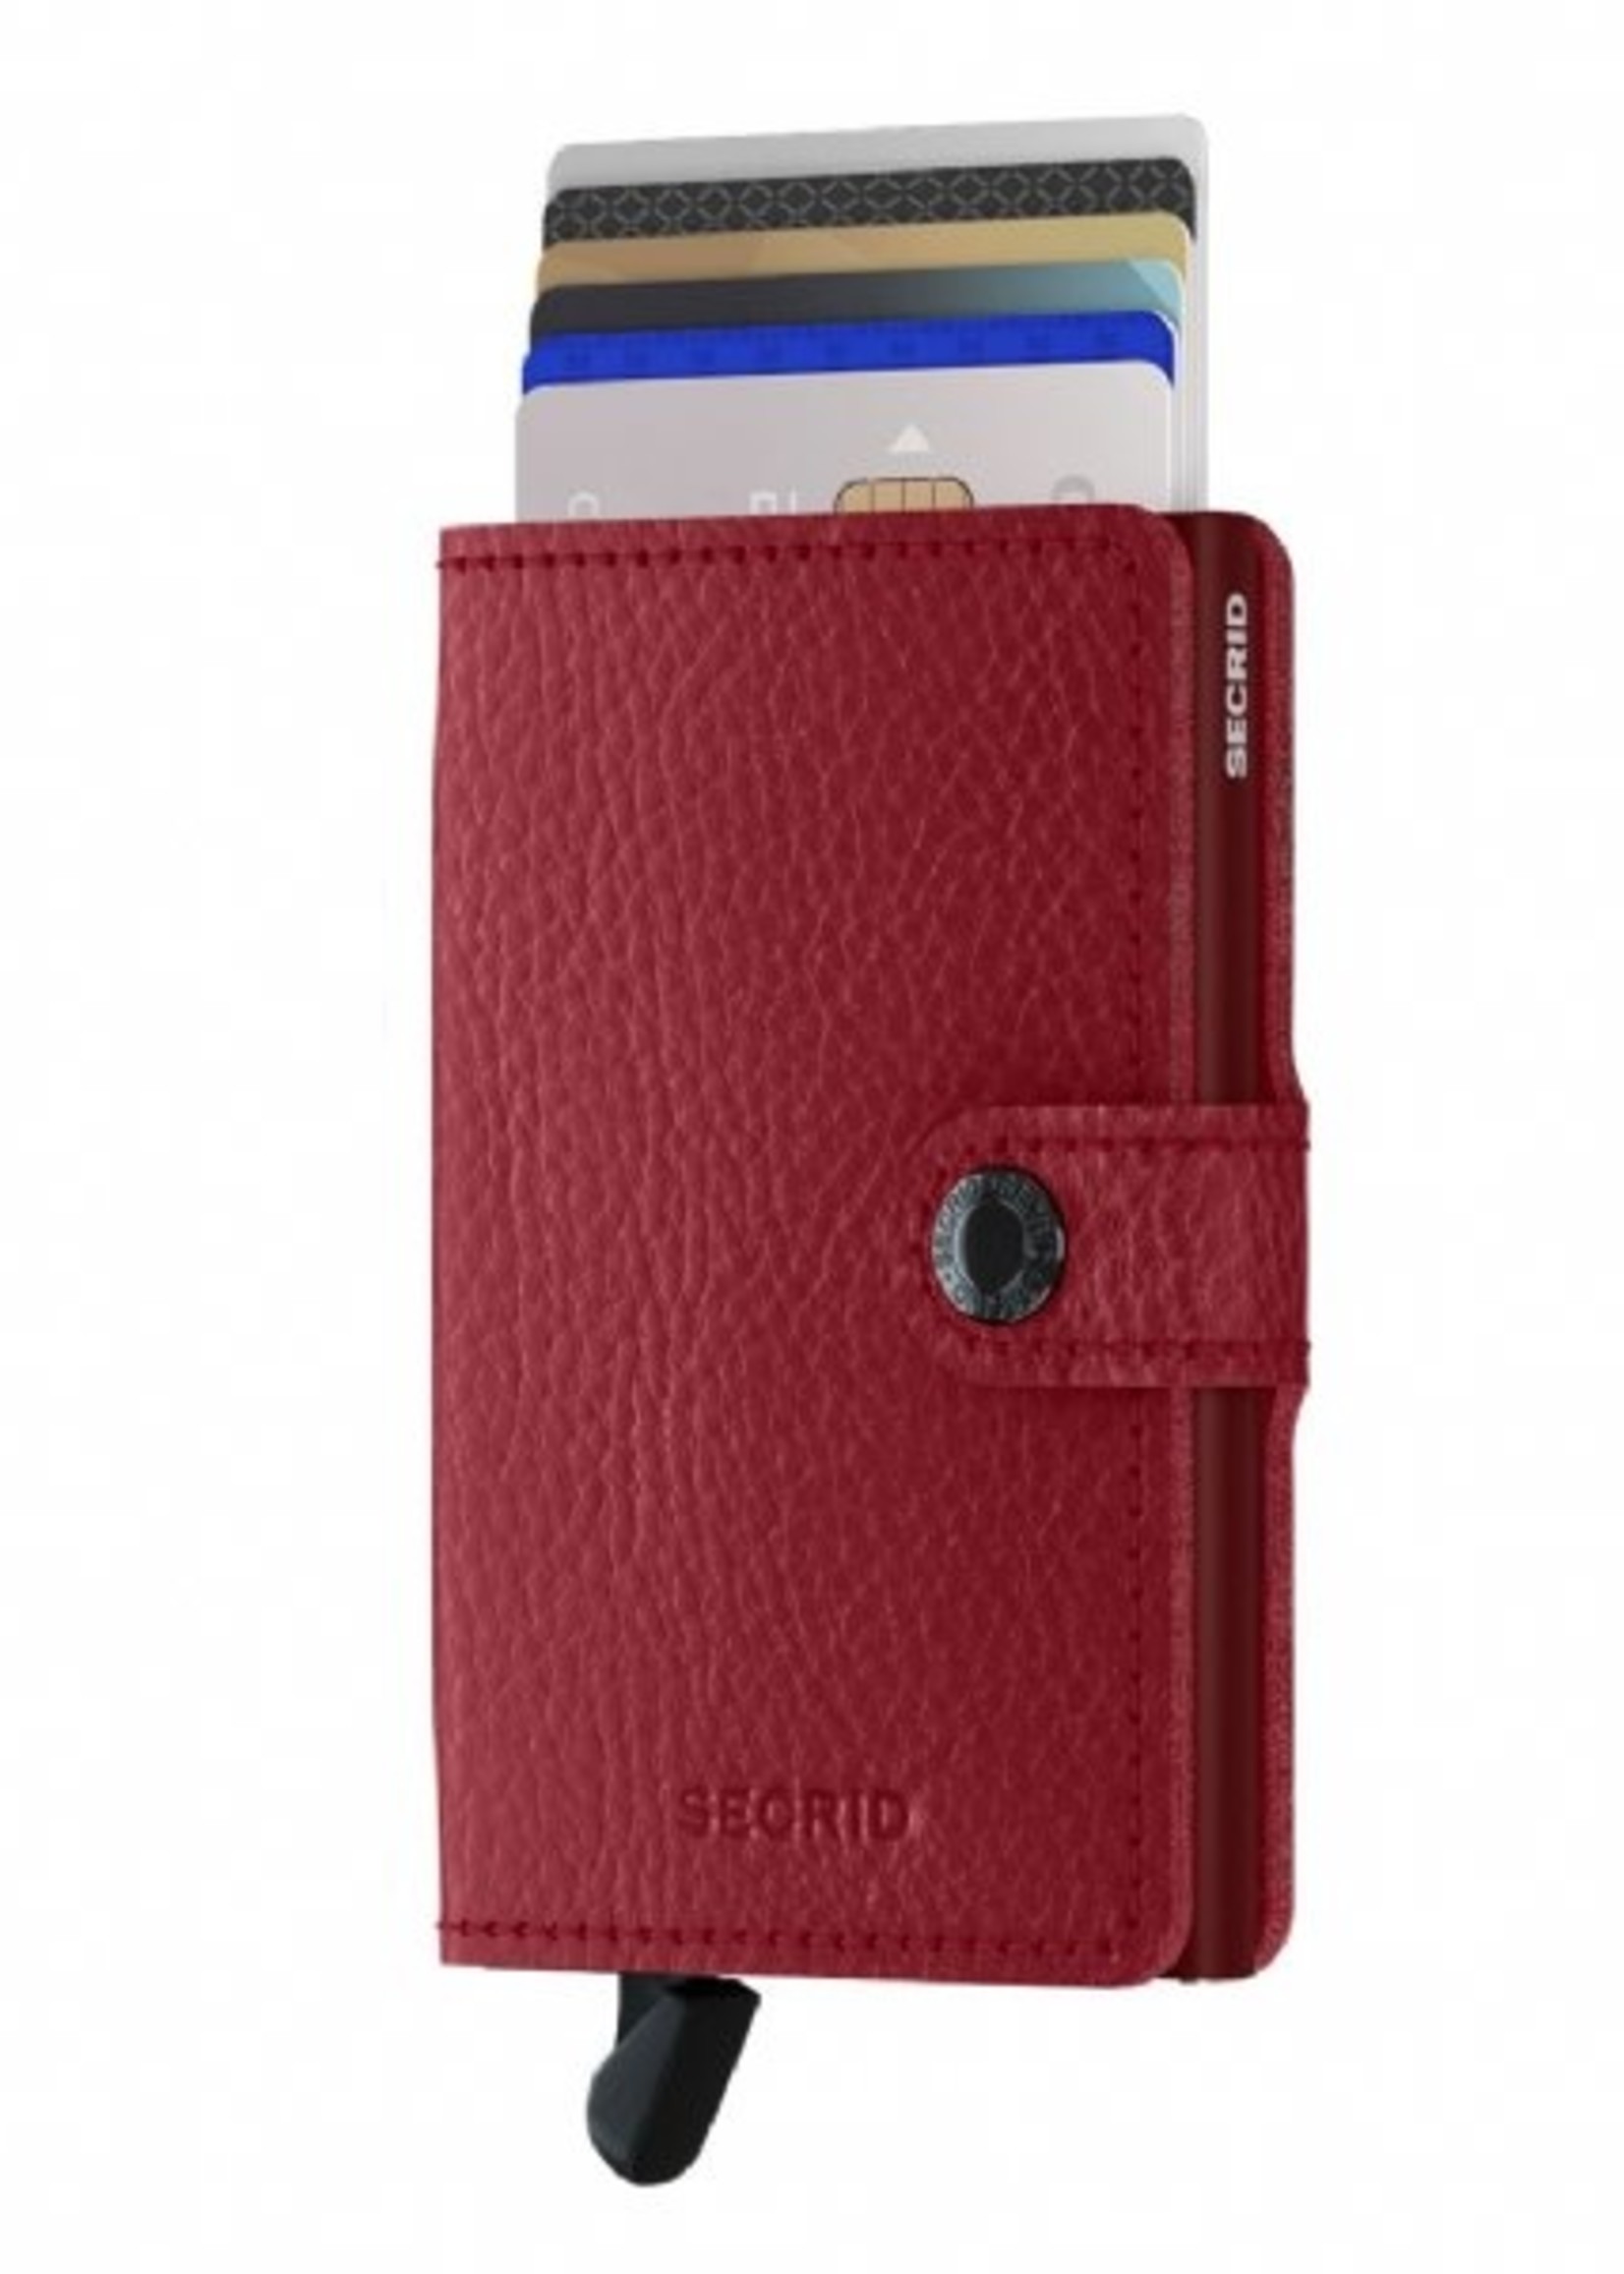 Secrid Mini Wallet Veg Rosso